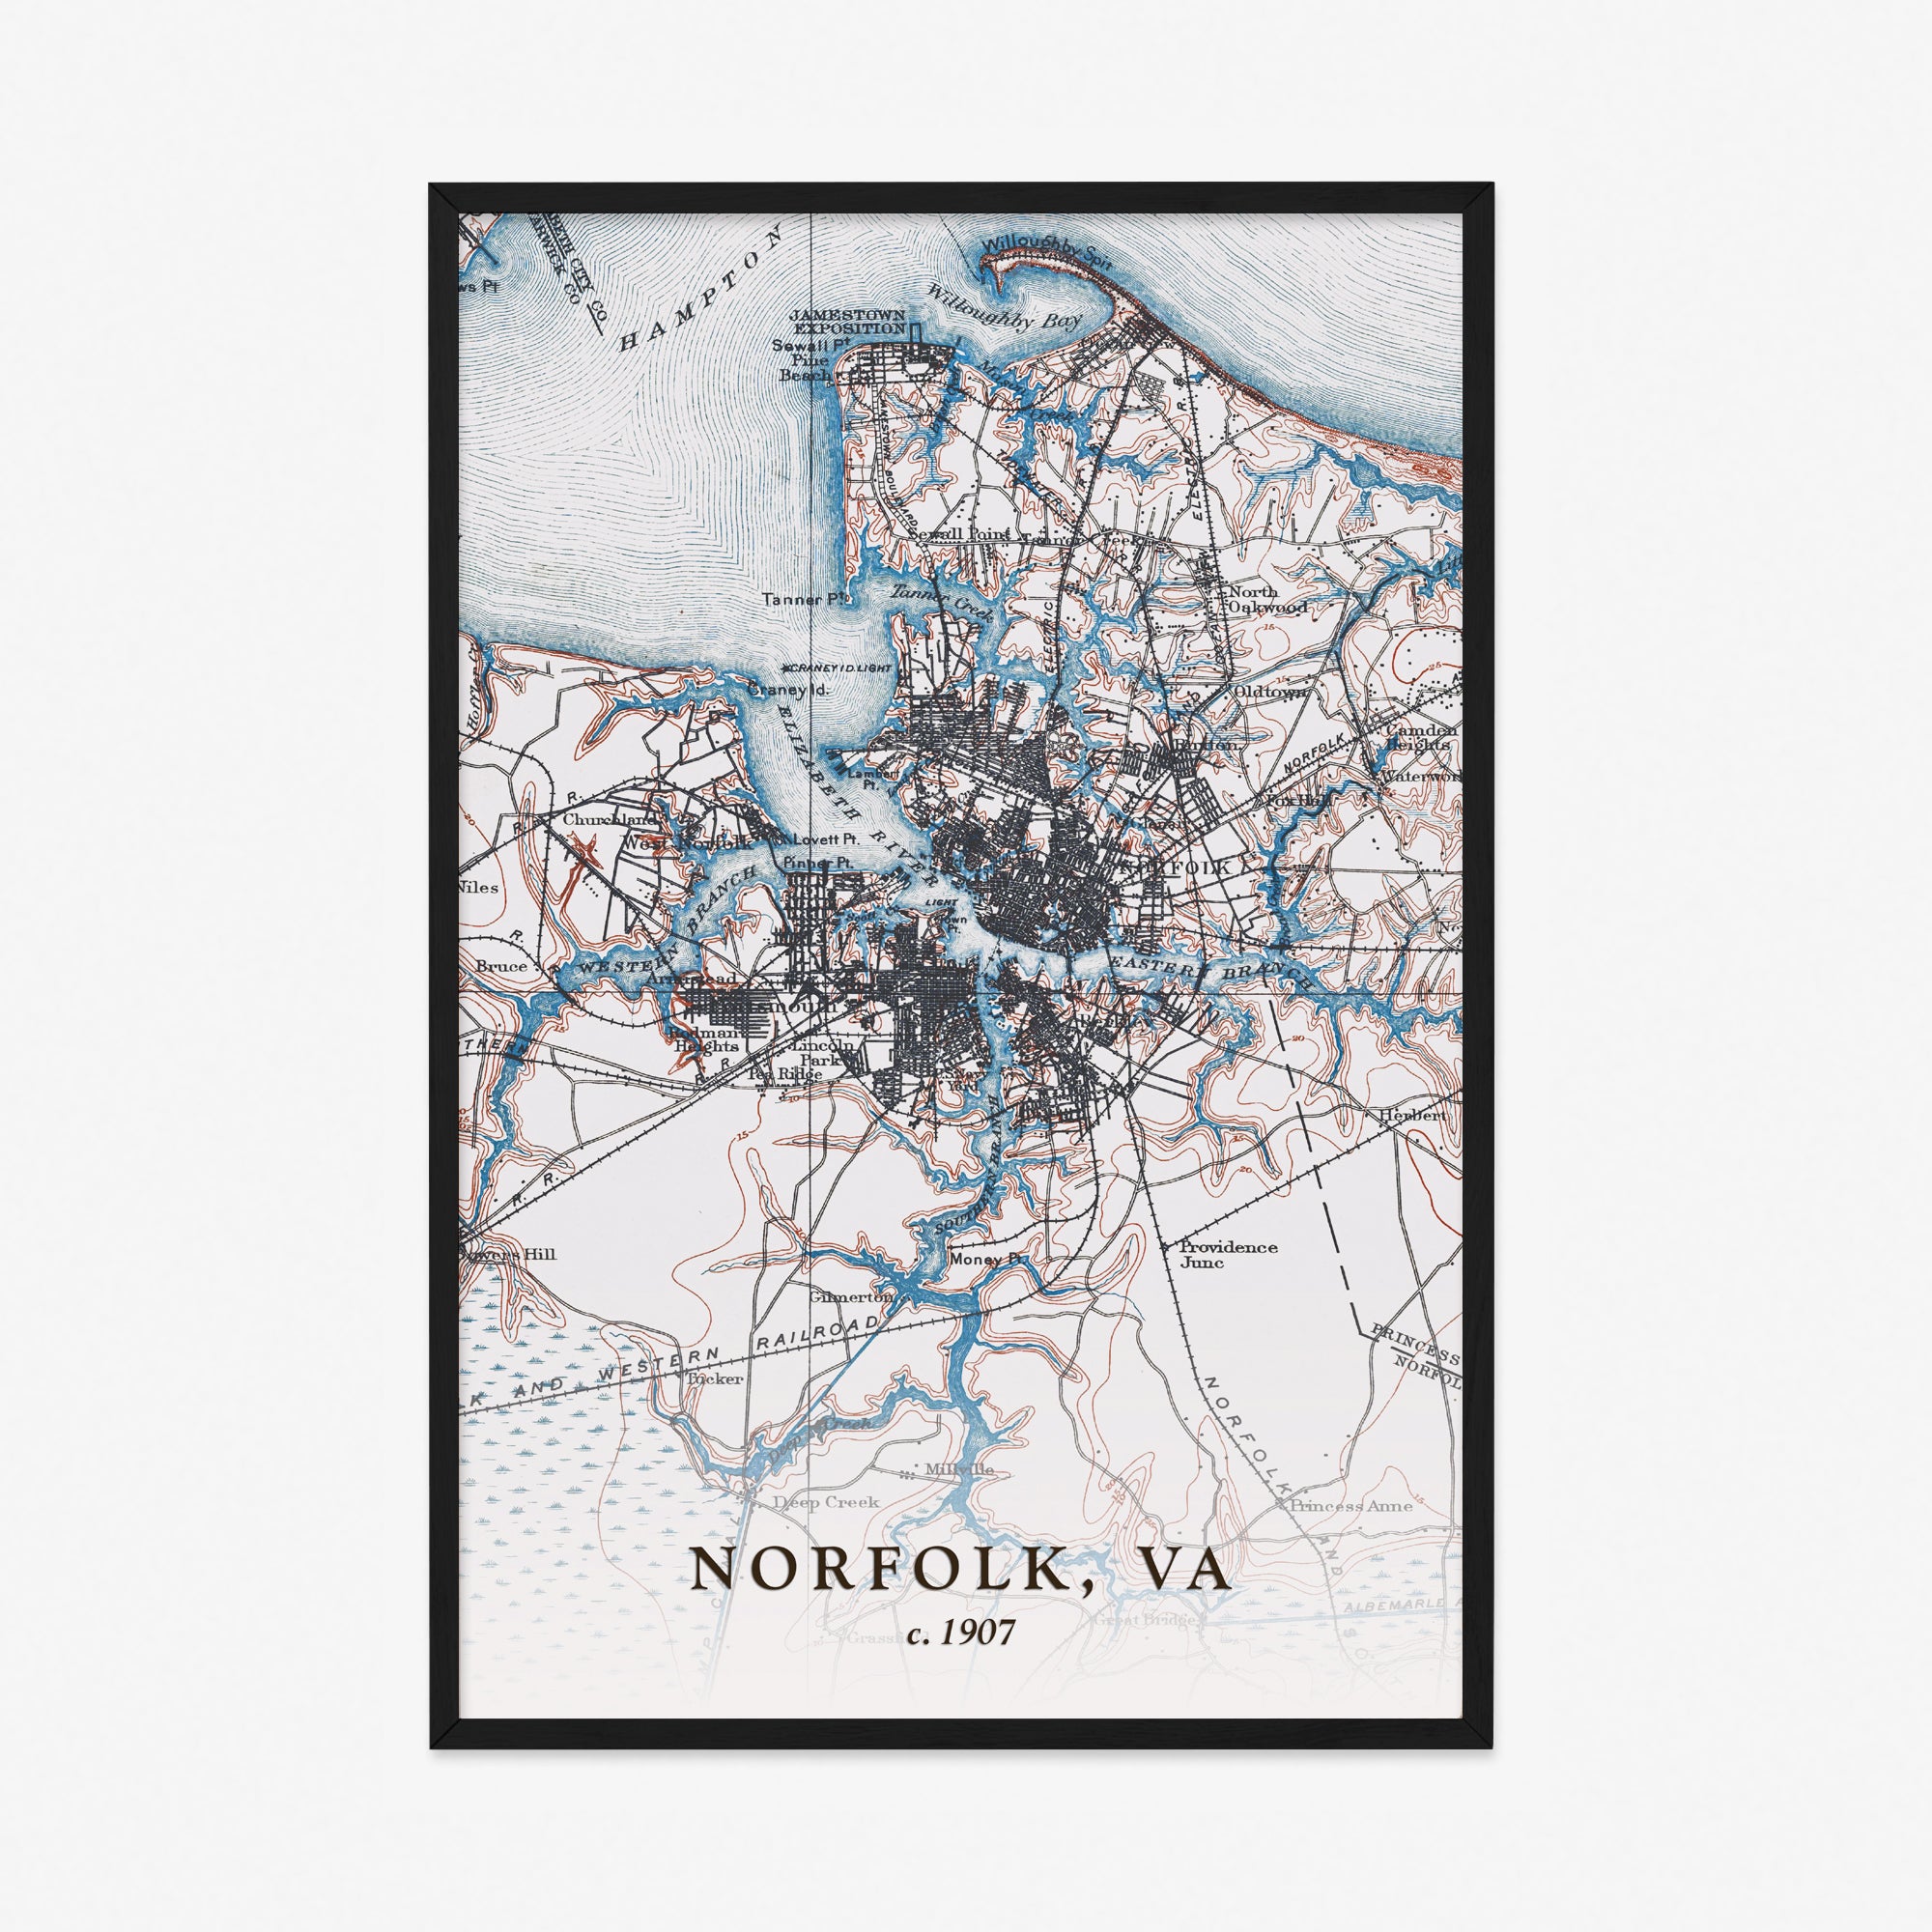 Norfolk, VA - 1907 Topographic Map